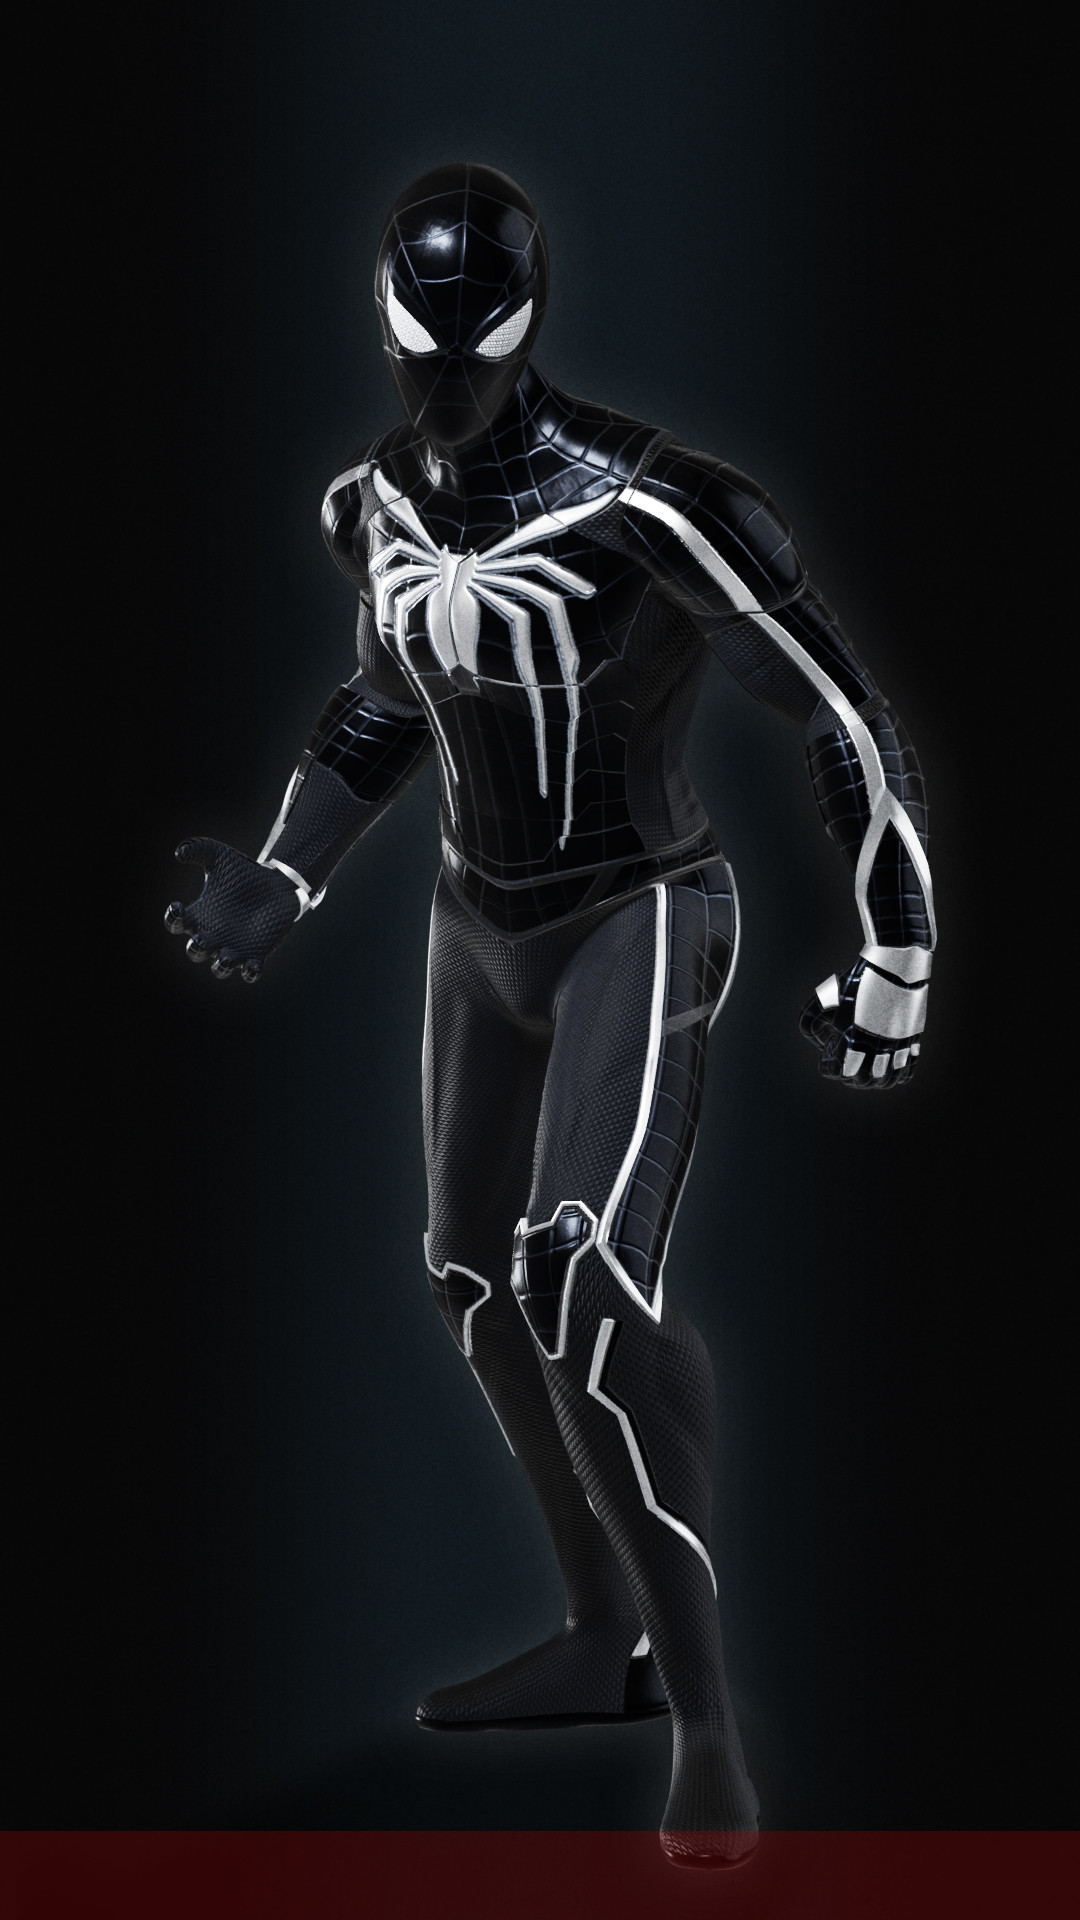 ArtStation - Spiderman Custom Suit design - 3D character asset | Resources